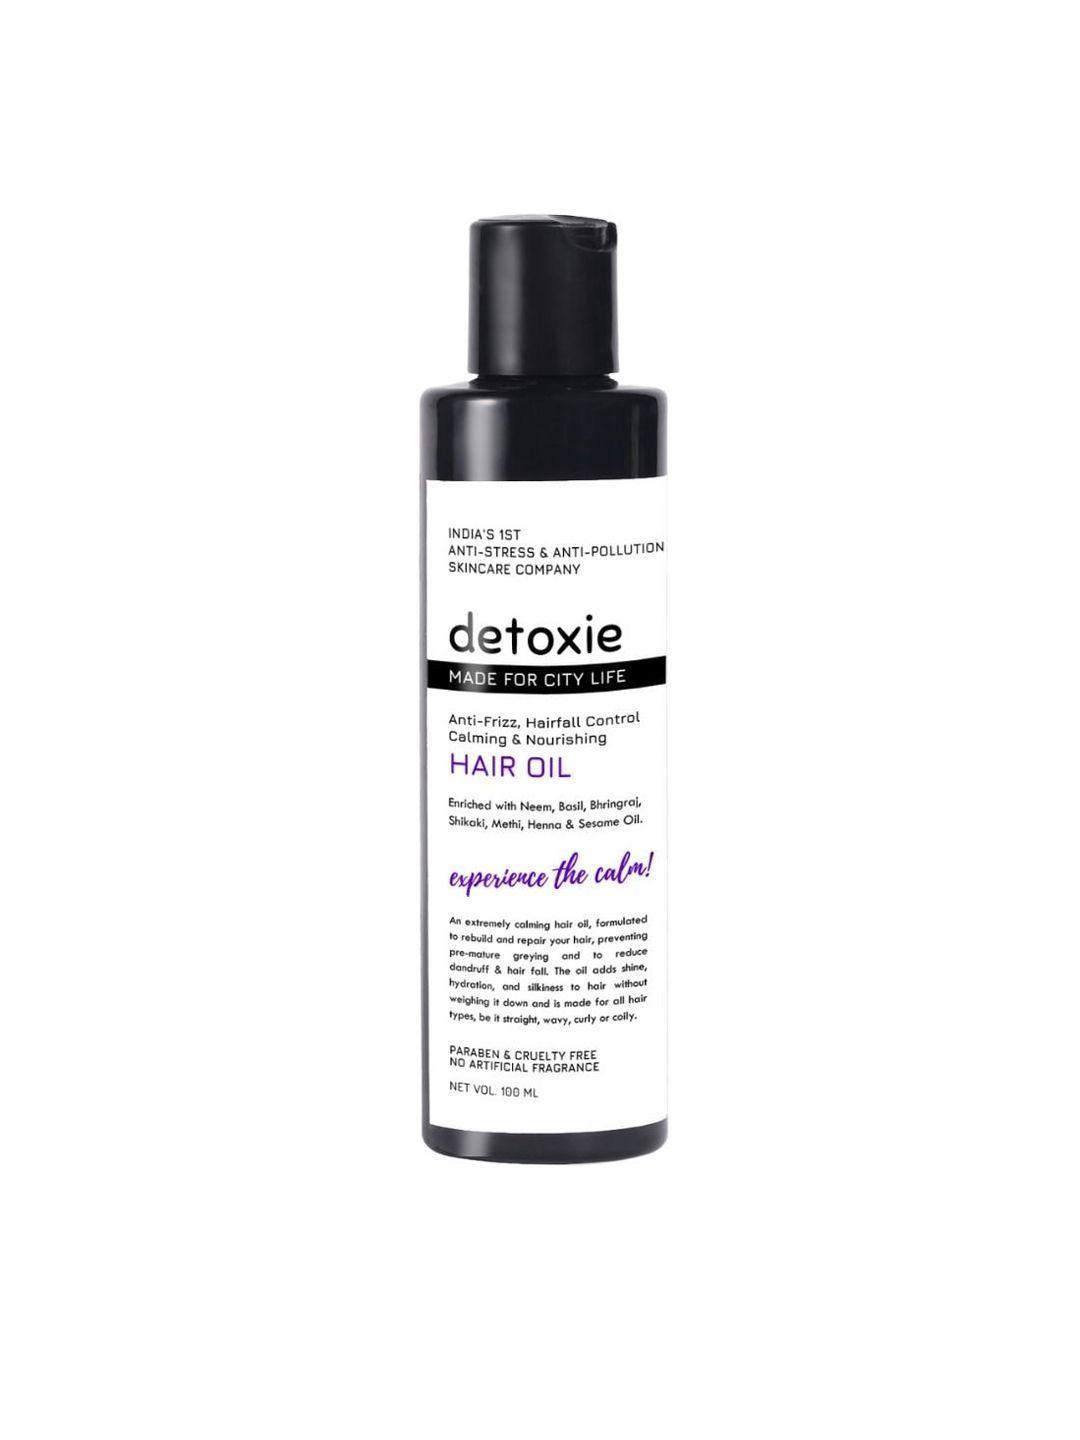 detoxie anti-frizz hairfall control calming & nourishing hair oil with neem - 100 ml